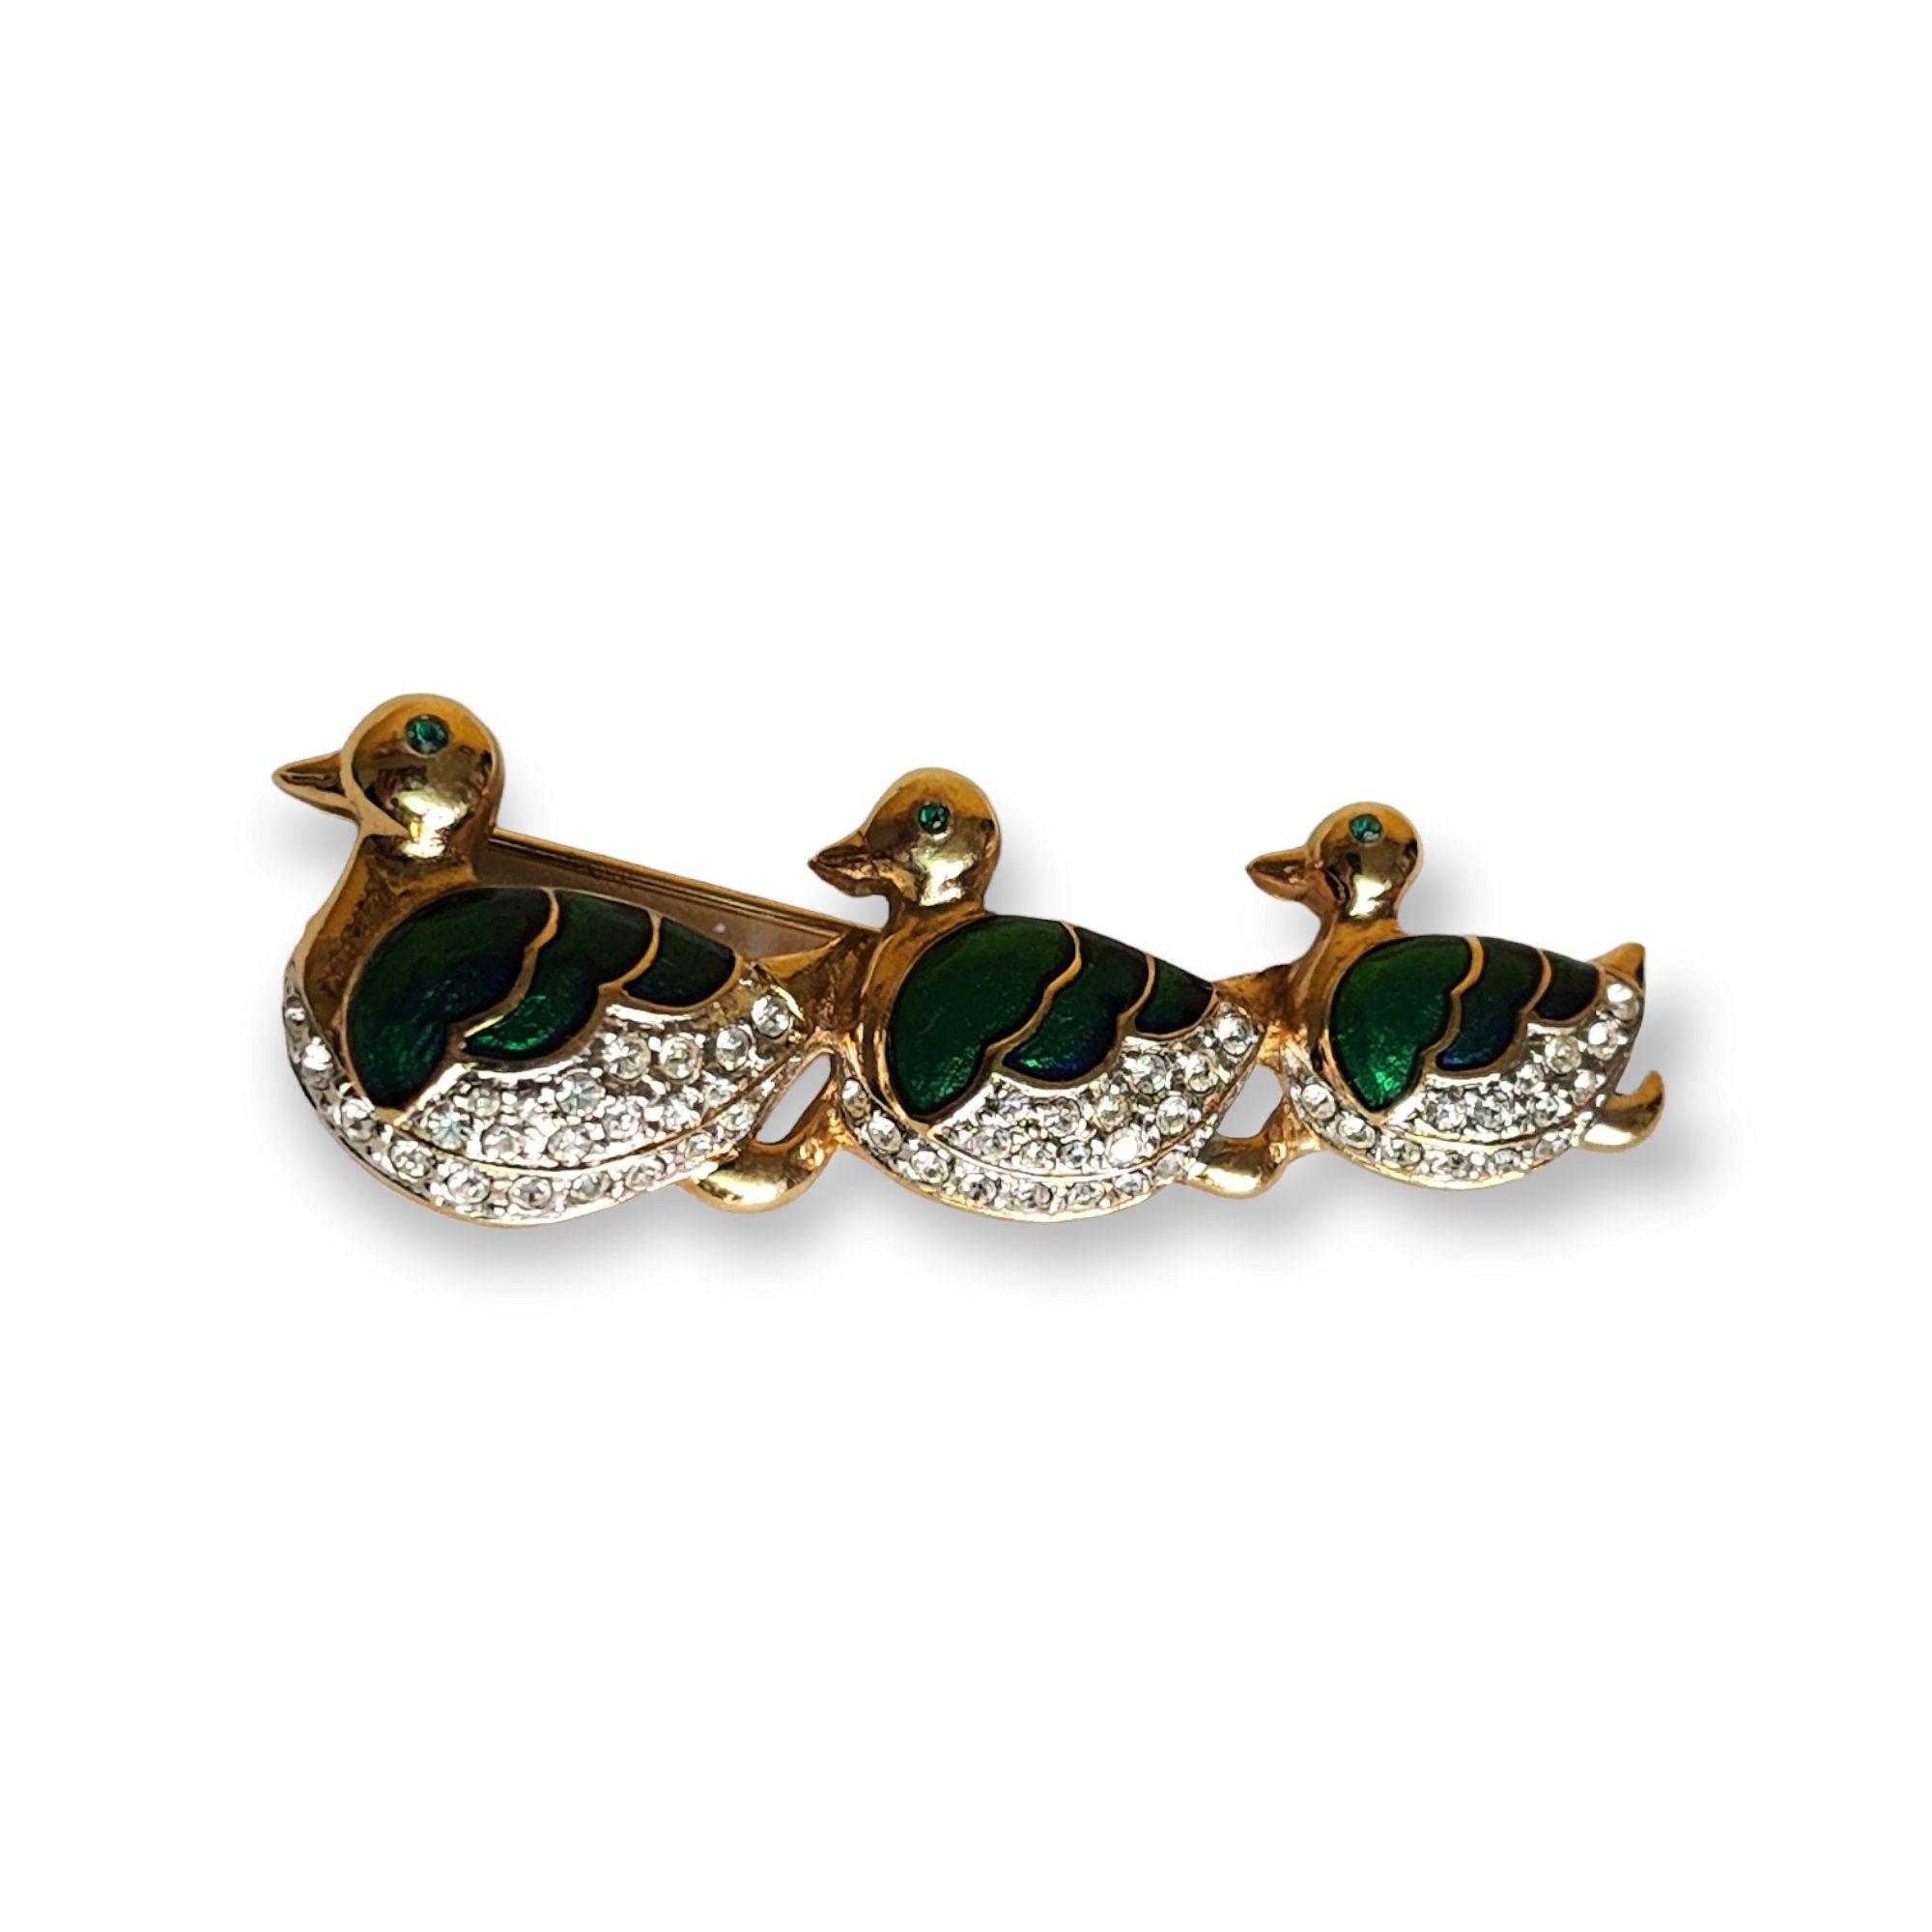 Mother Duckling Family Trio Green Enamel Swarovski Crystal Diamante Vintage Brooch Pin, Swan Brooch, Choice